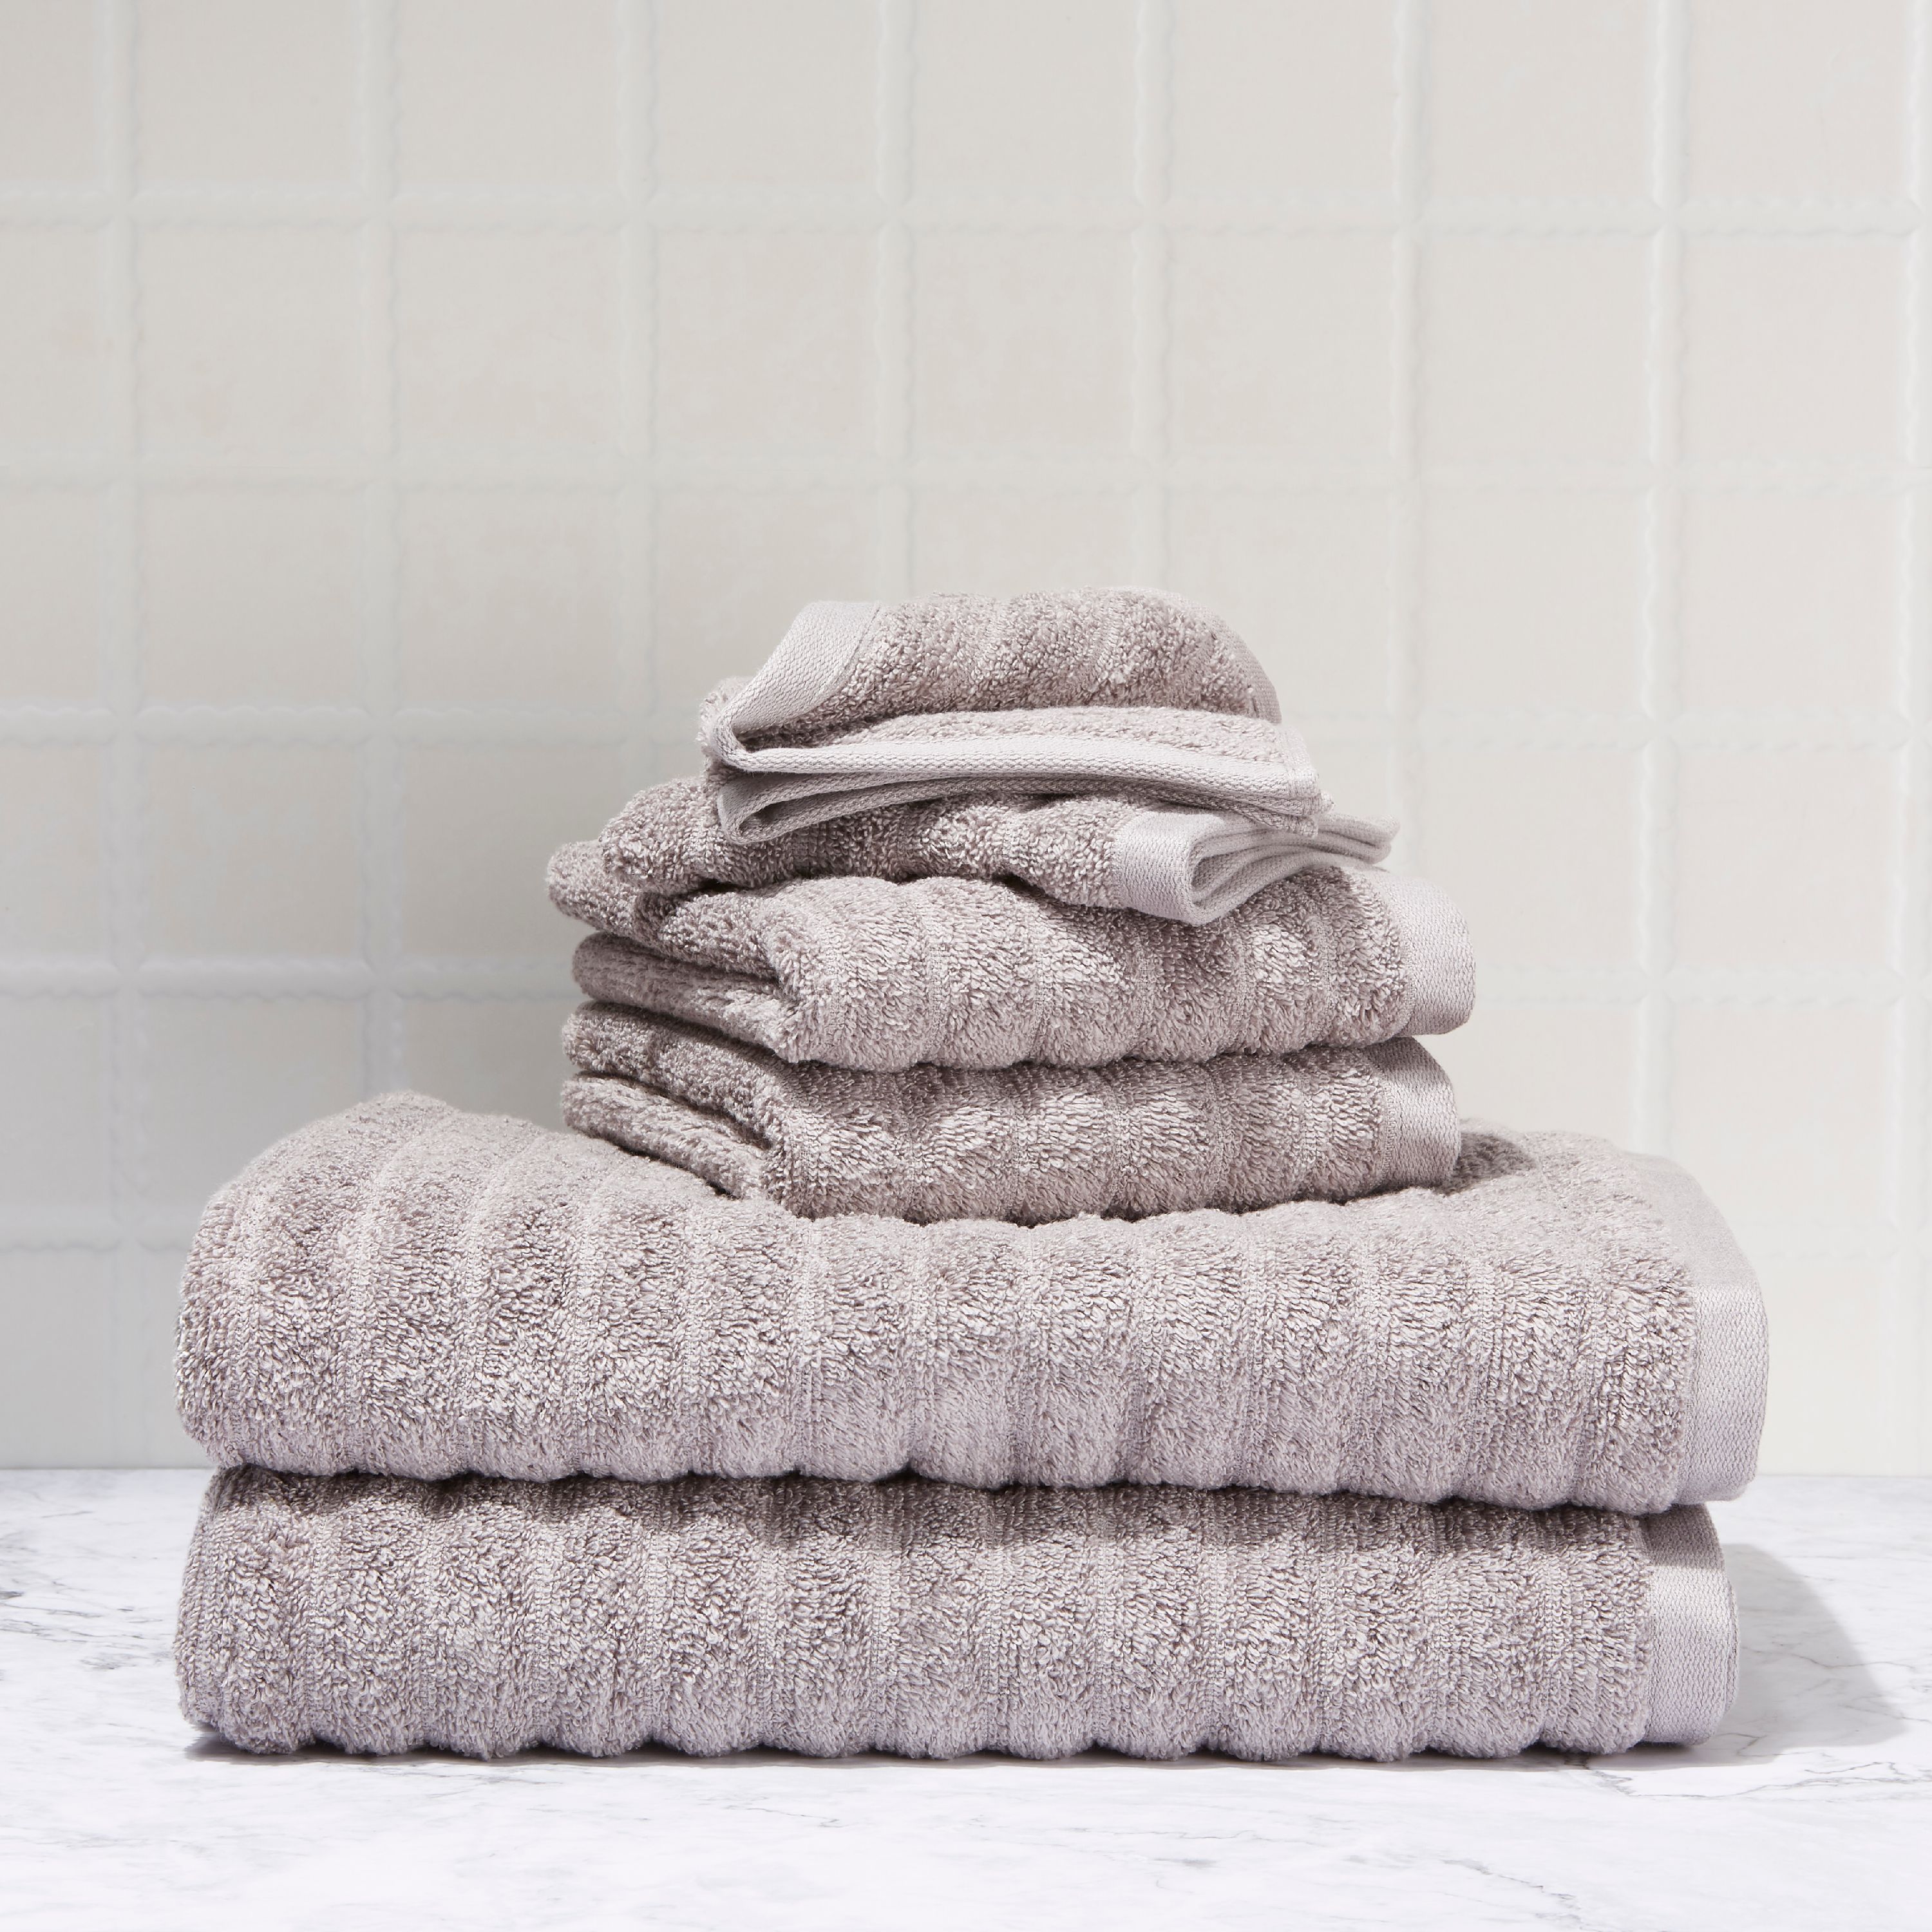 Mainstays Performance Textured 6-Piece Bath Towel Set - Grey Flannel - image 1 of 6